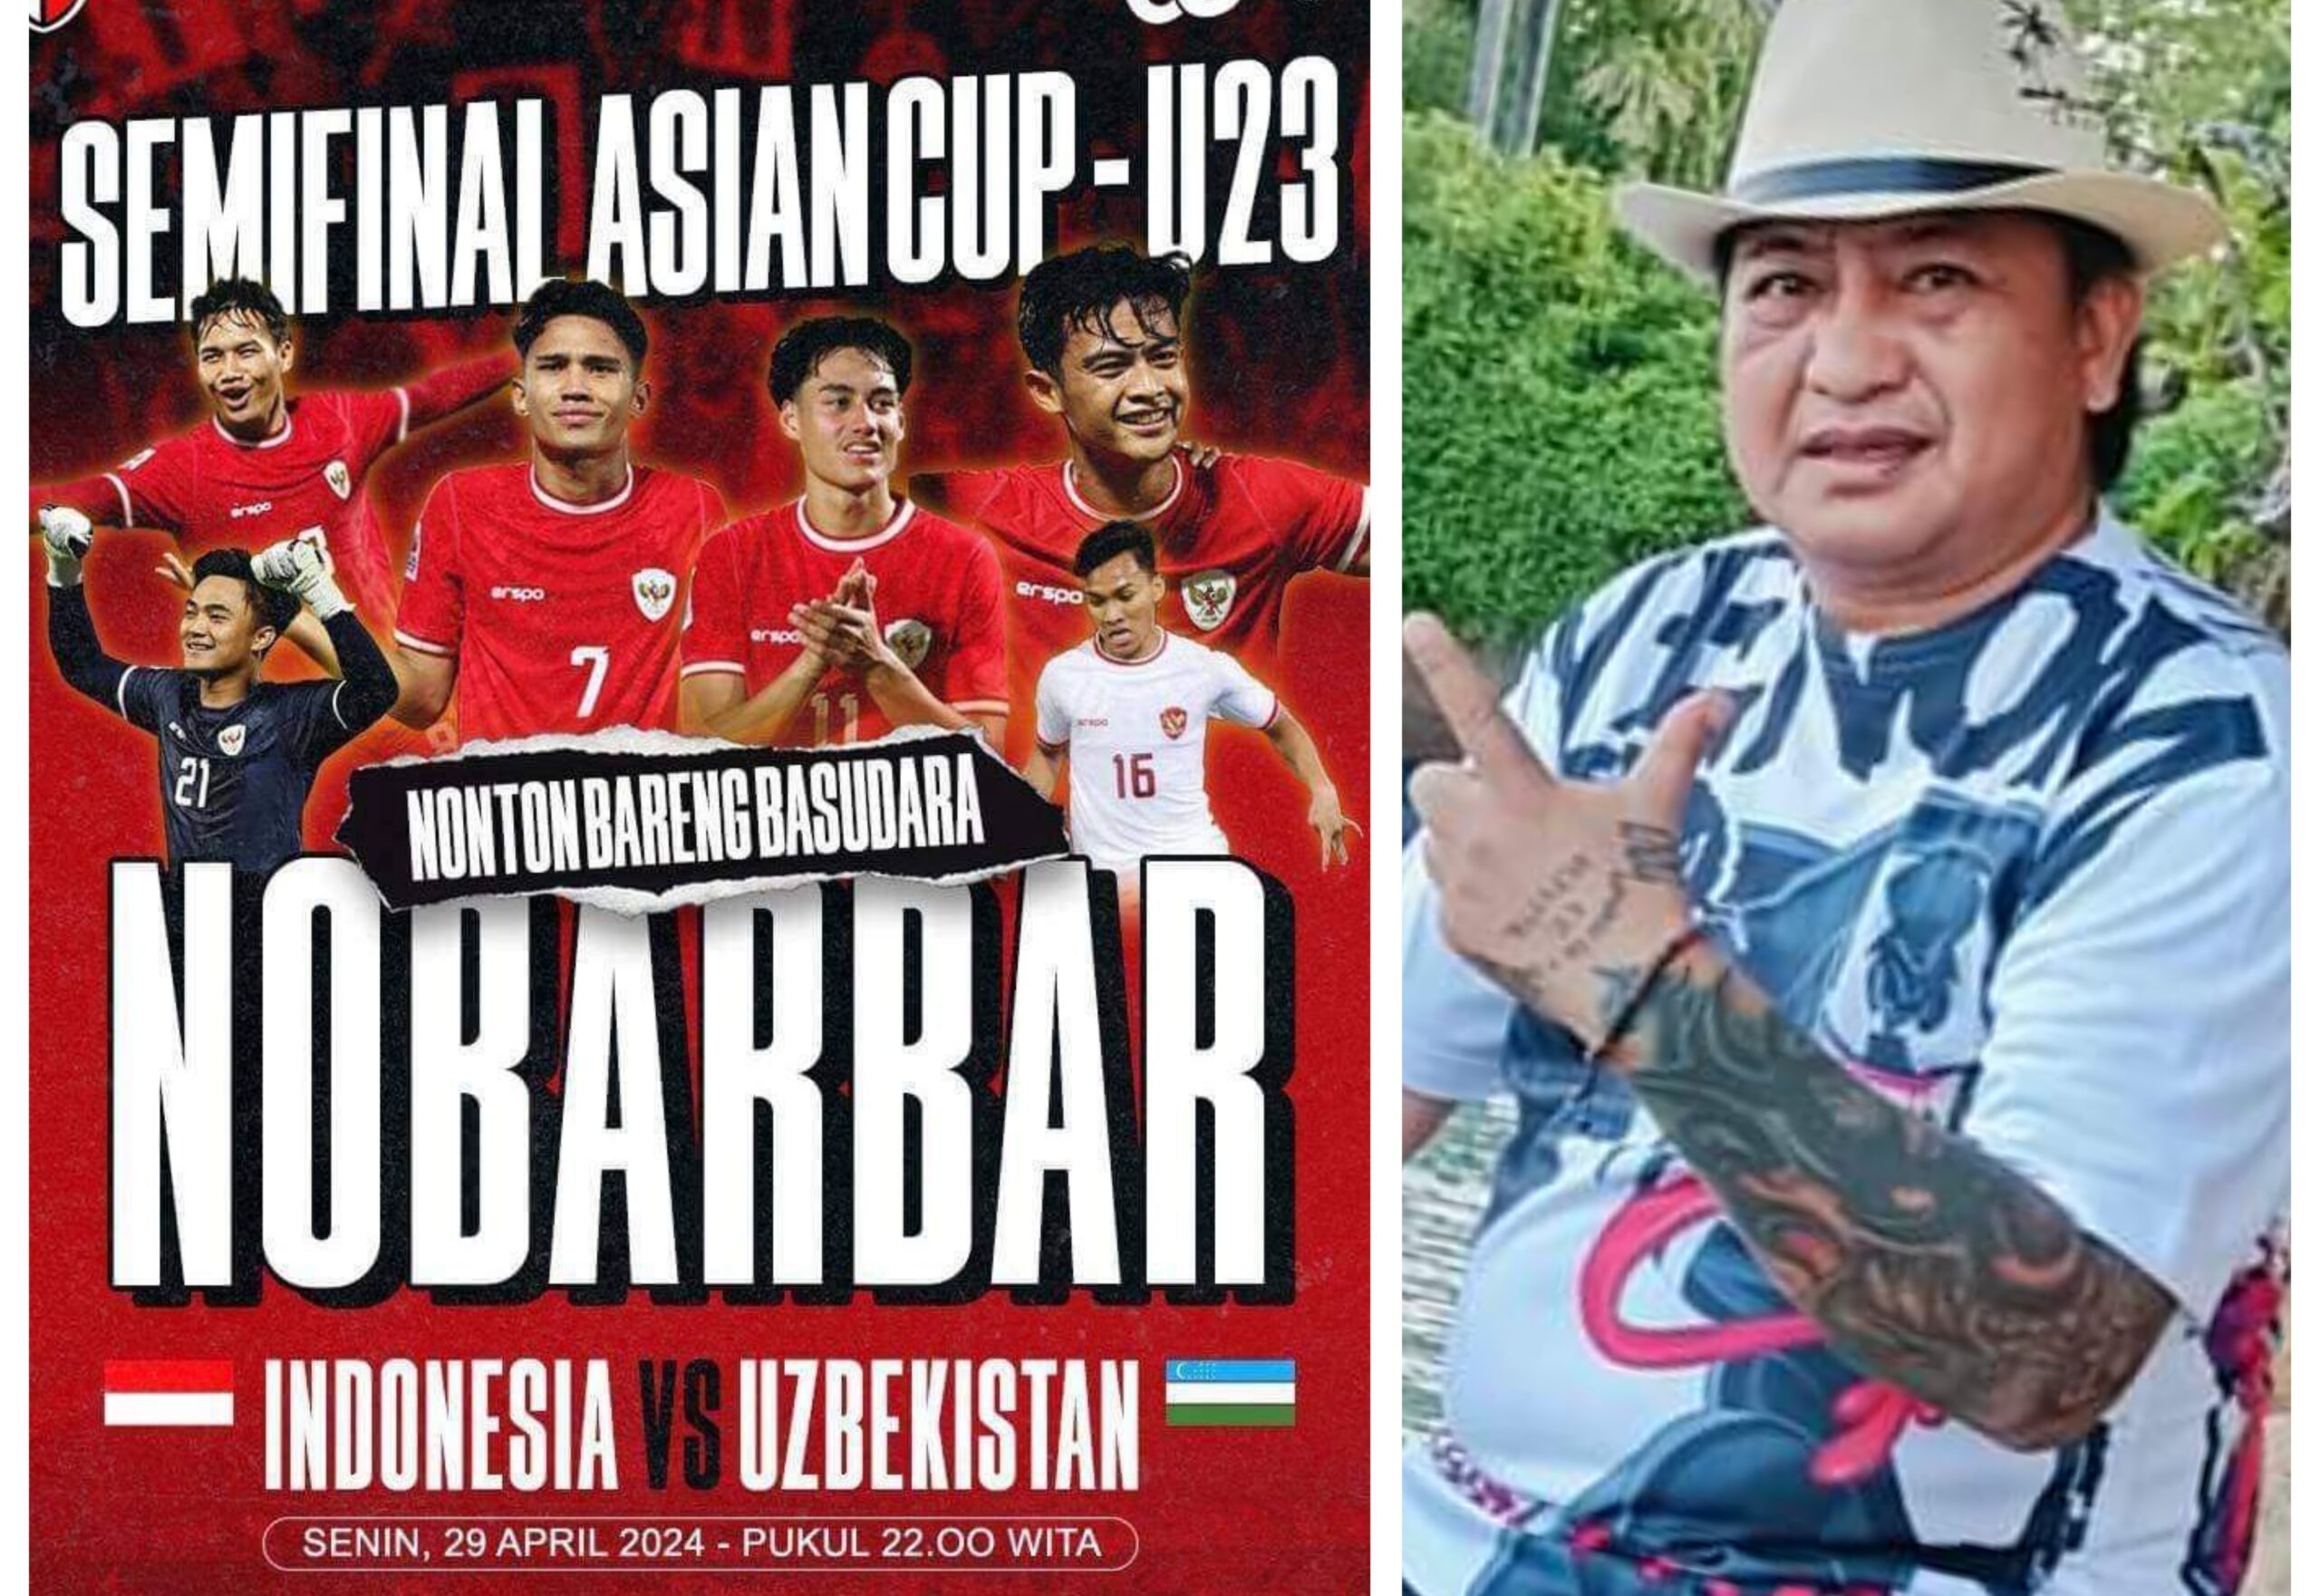 Dukung Timnas Indonesia U-23 Vs Uzbekistan, Relawan Pendukung Caroll Senduk Gelar “Nobarbar”